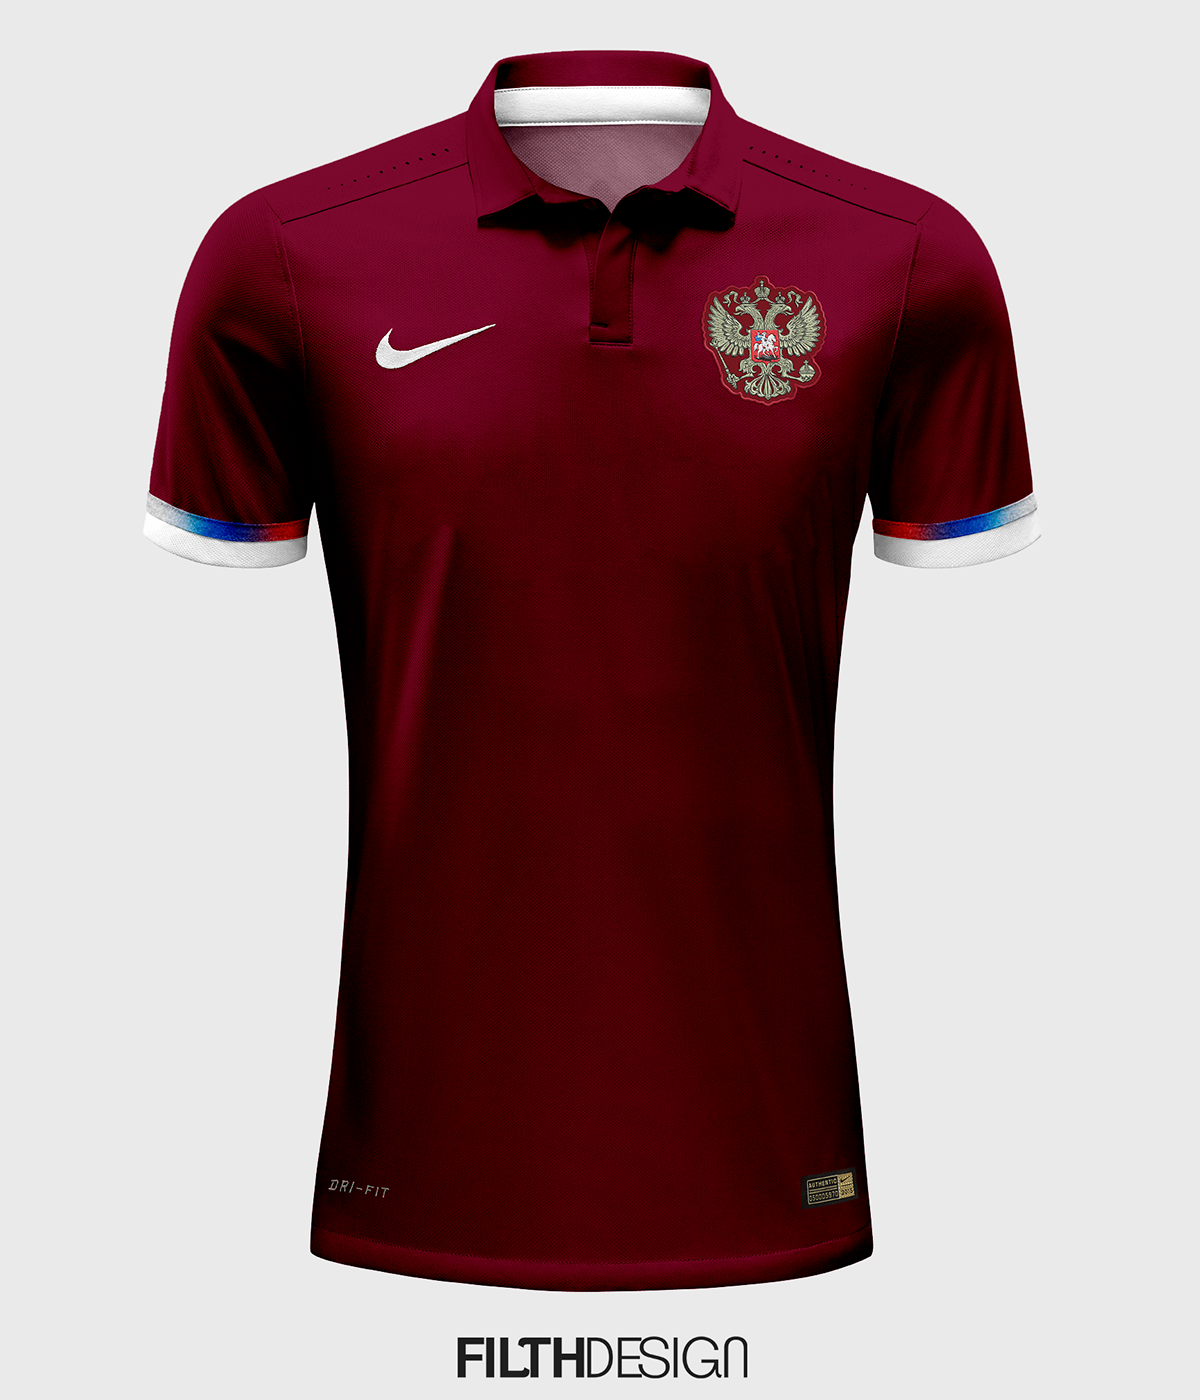 football jersey trikot camiseta camisa Bosnia and Herzegovina Turkey germany Deutschland Italy italia poland polska Netherlands